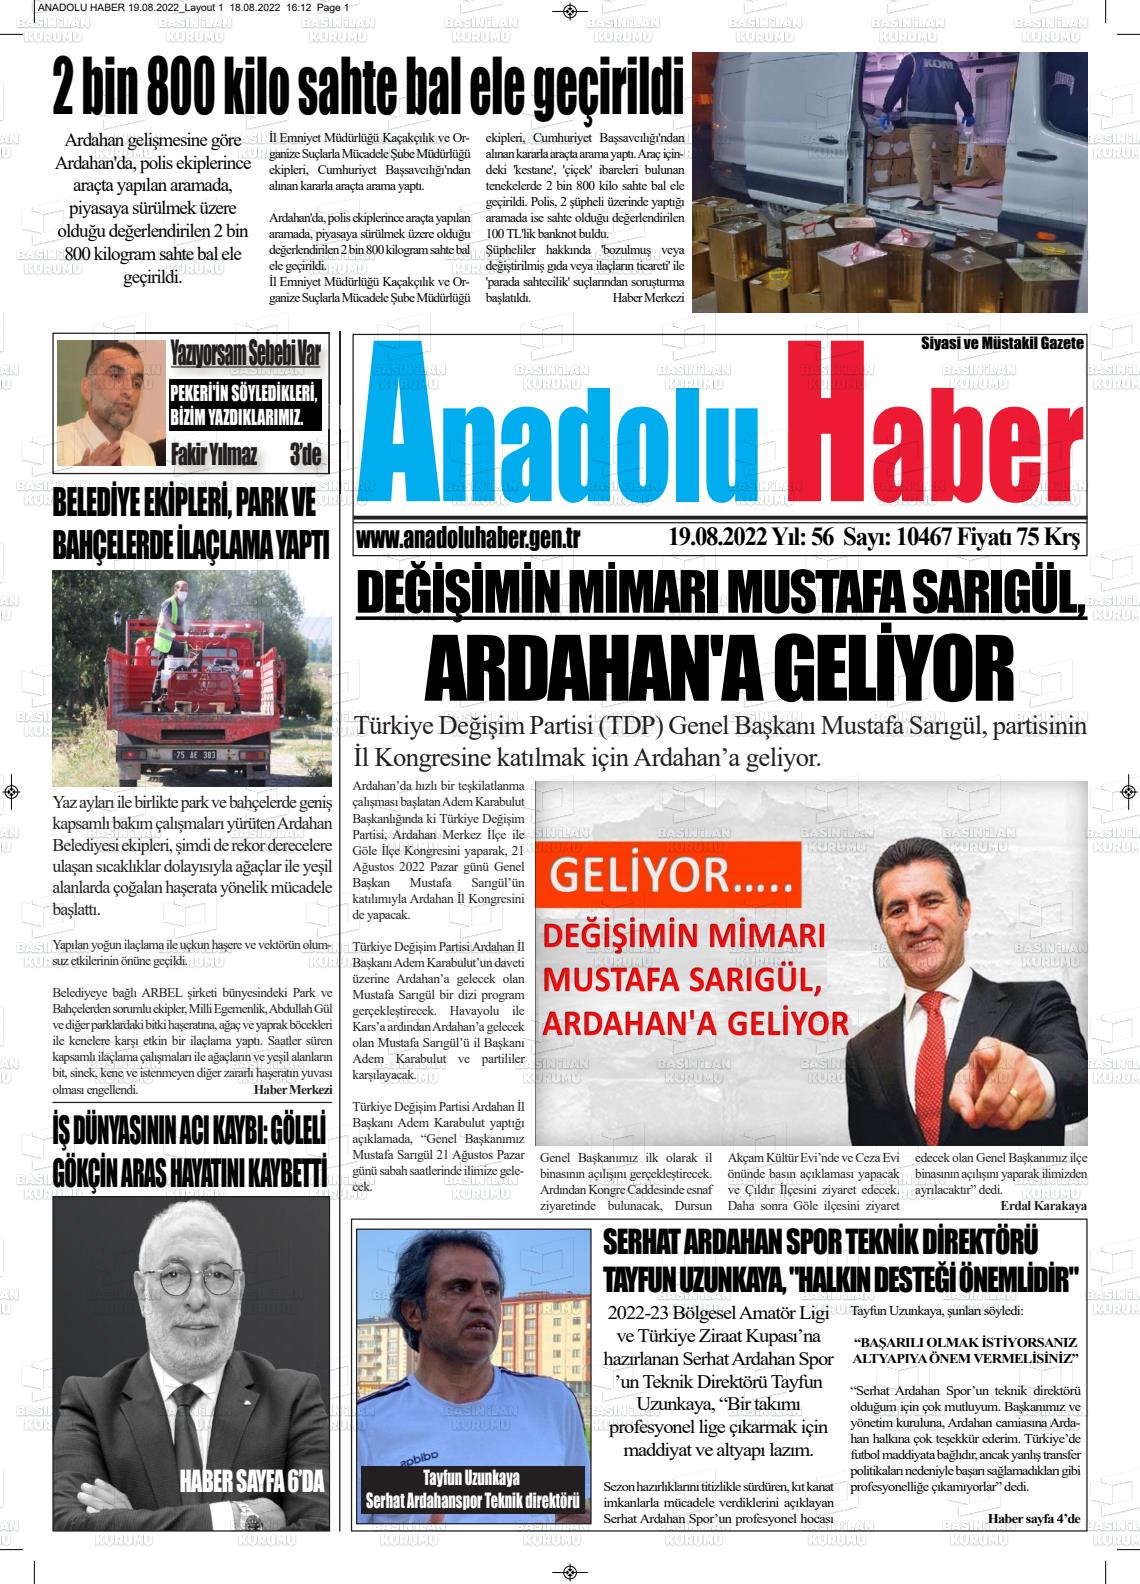 23 Şubat Gazete Manşeti